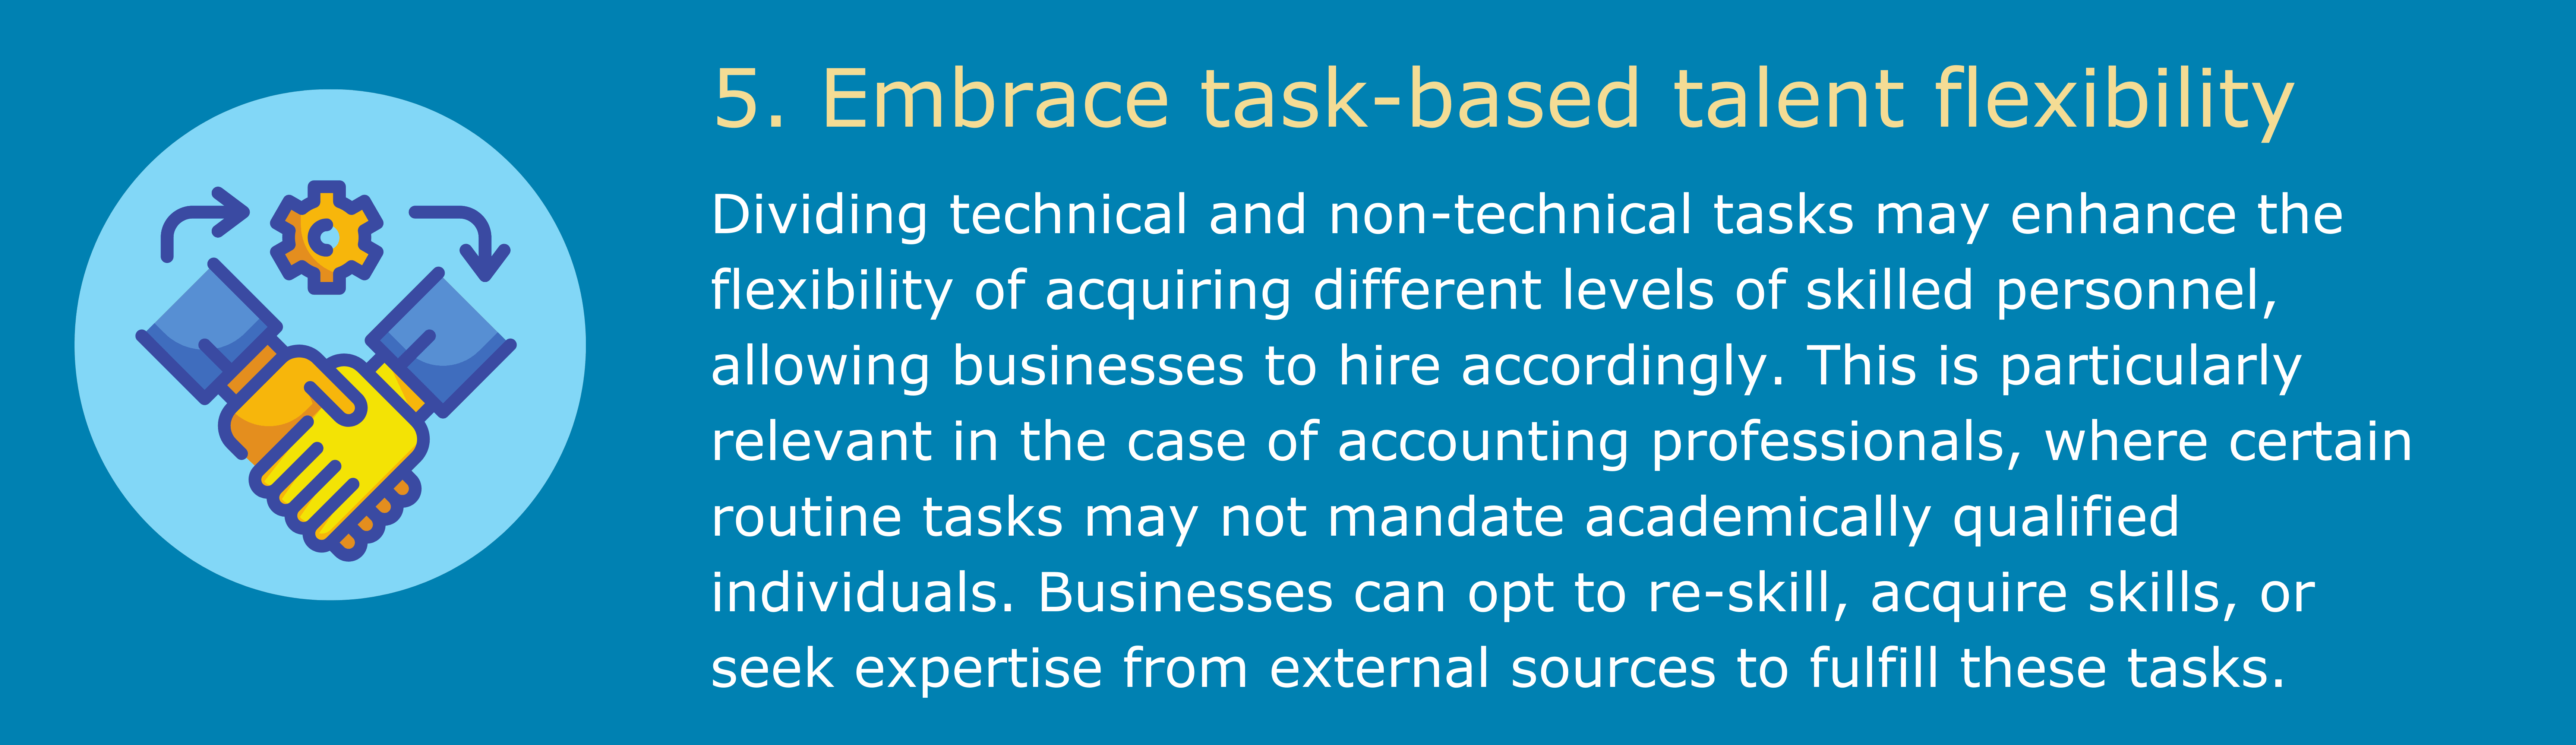 5.	Embrace Task-based talent flexibility